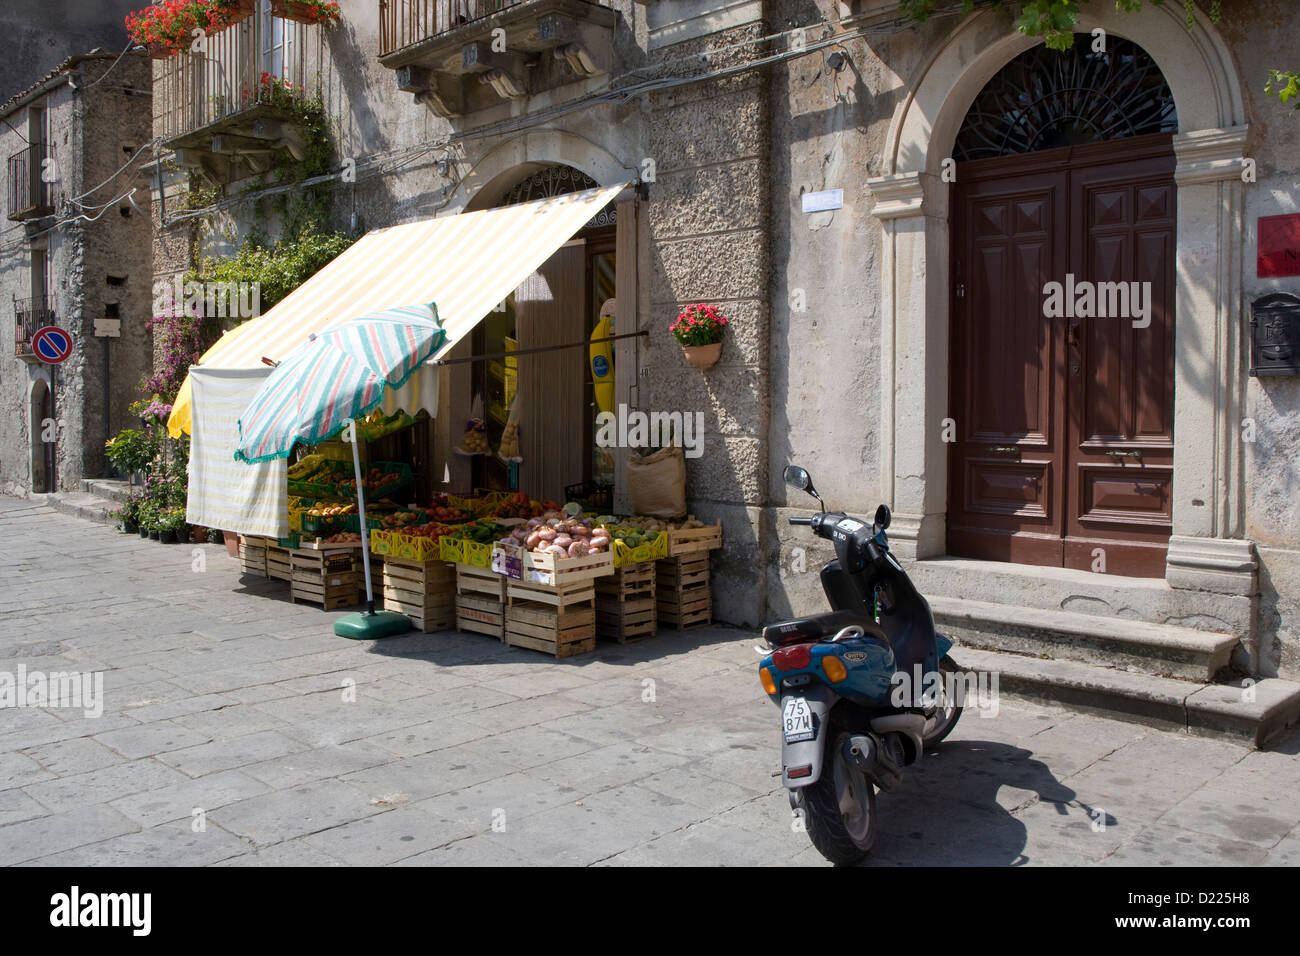 Novara di Sicilia: local fruit & veg shop with sunshade awnings Stock Photo